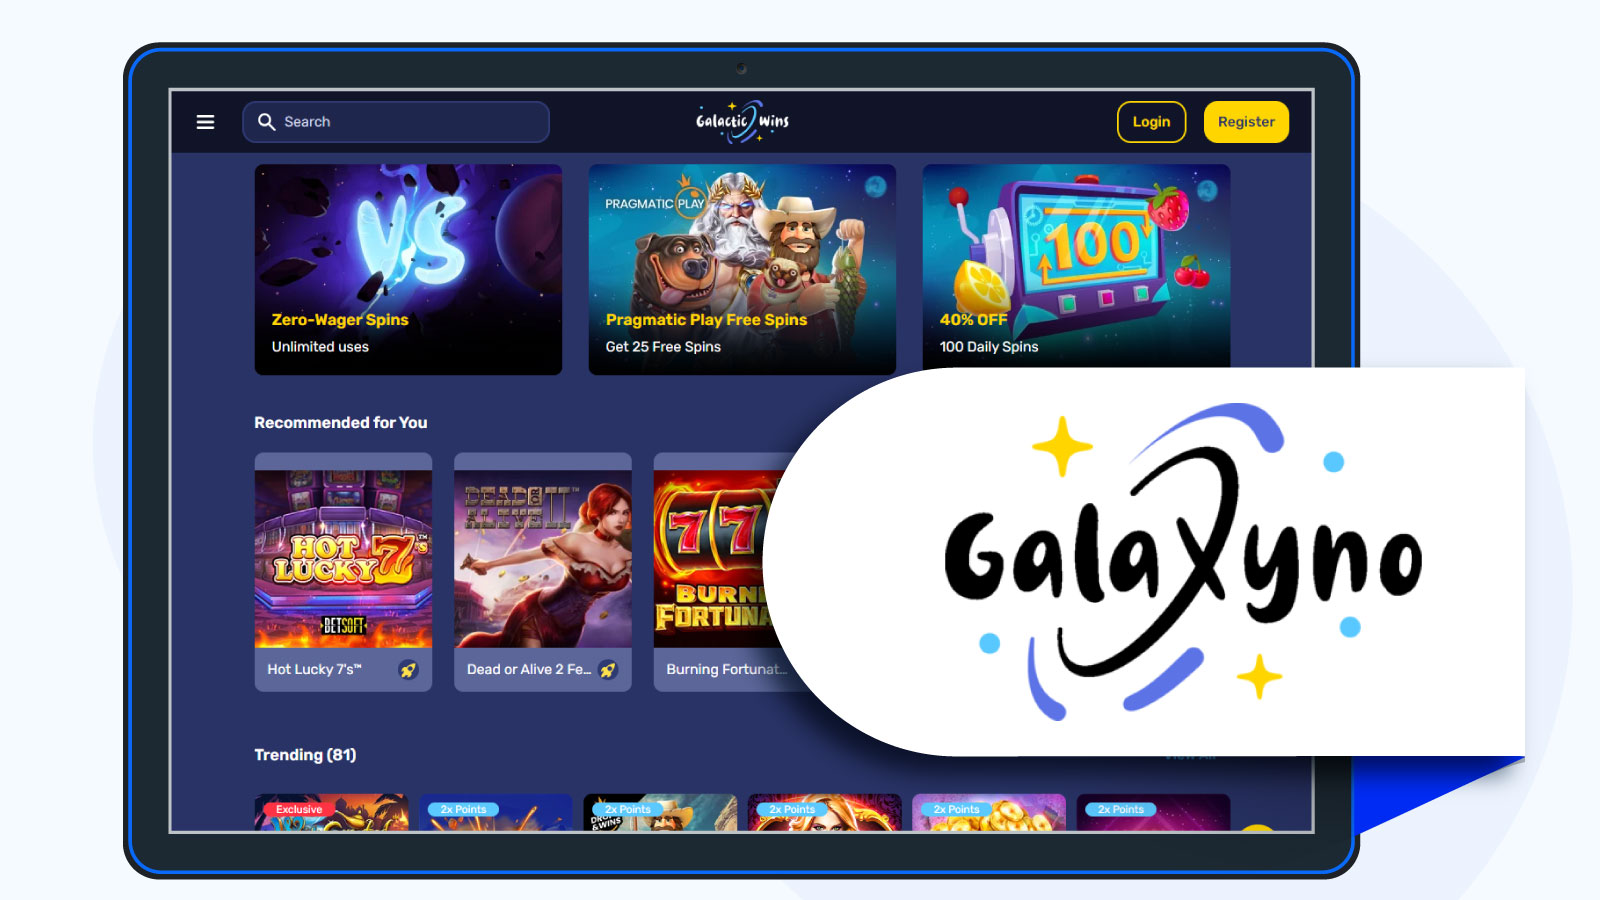 Galaxyno Casino homepage